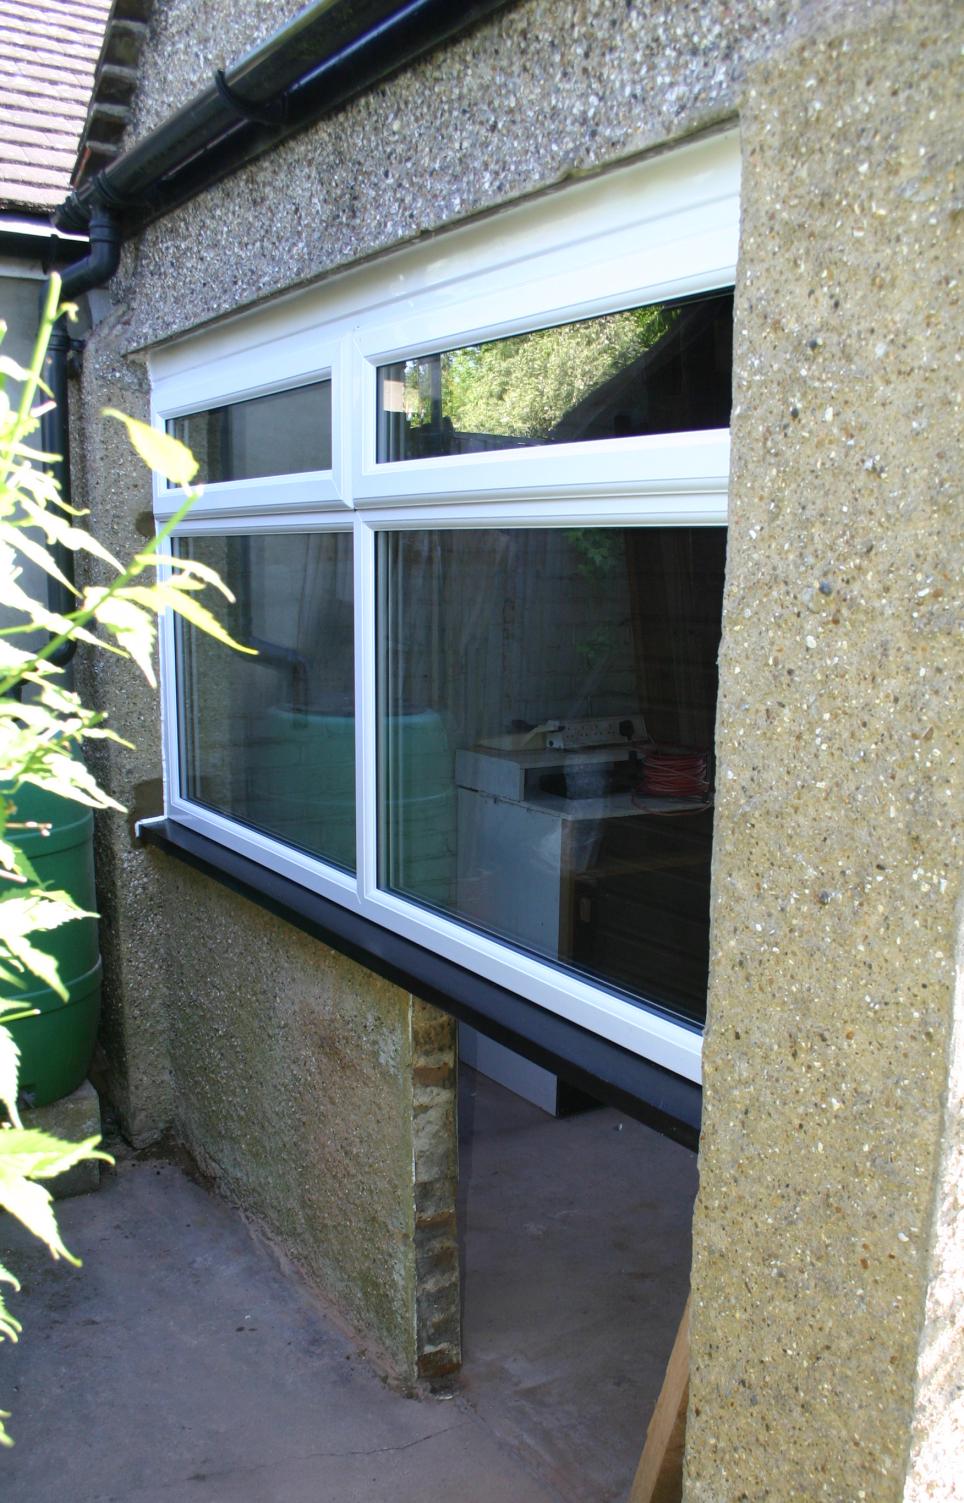 External View of New Window.